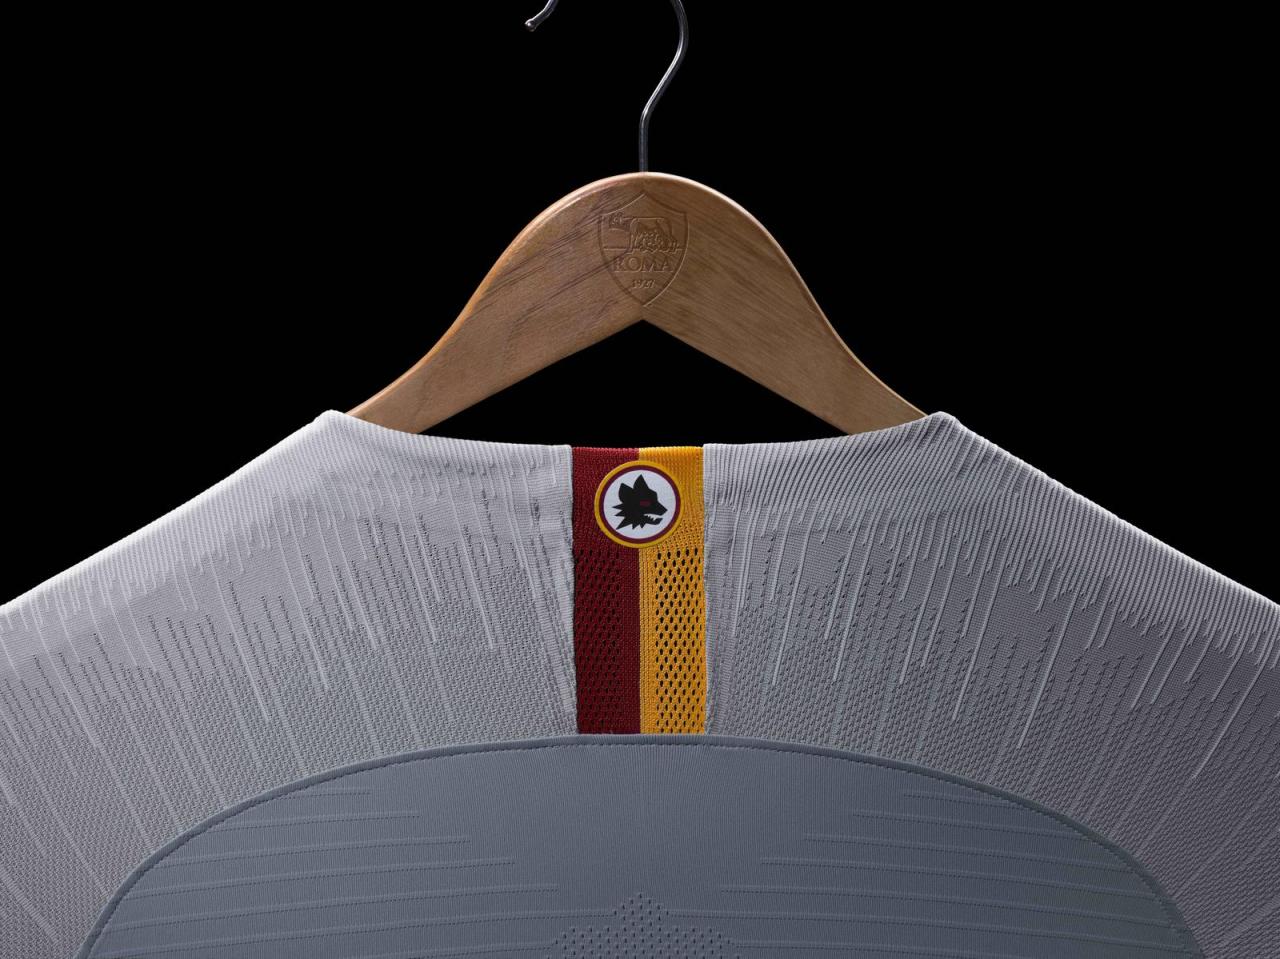 AS Roma 2018-19 Nike Away Kit Football Shirt